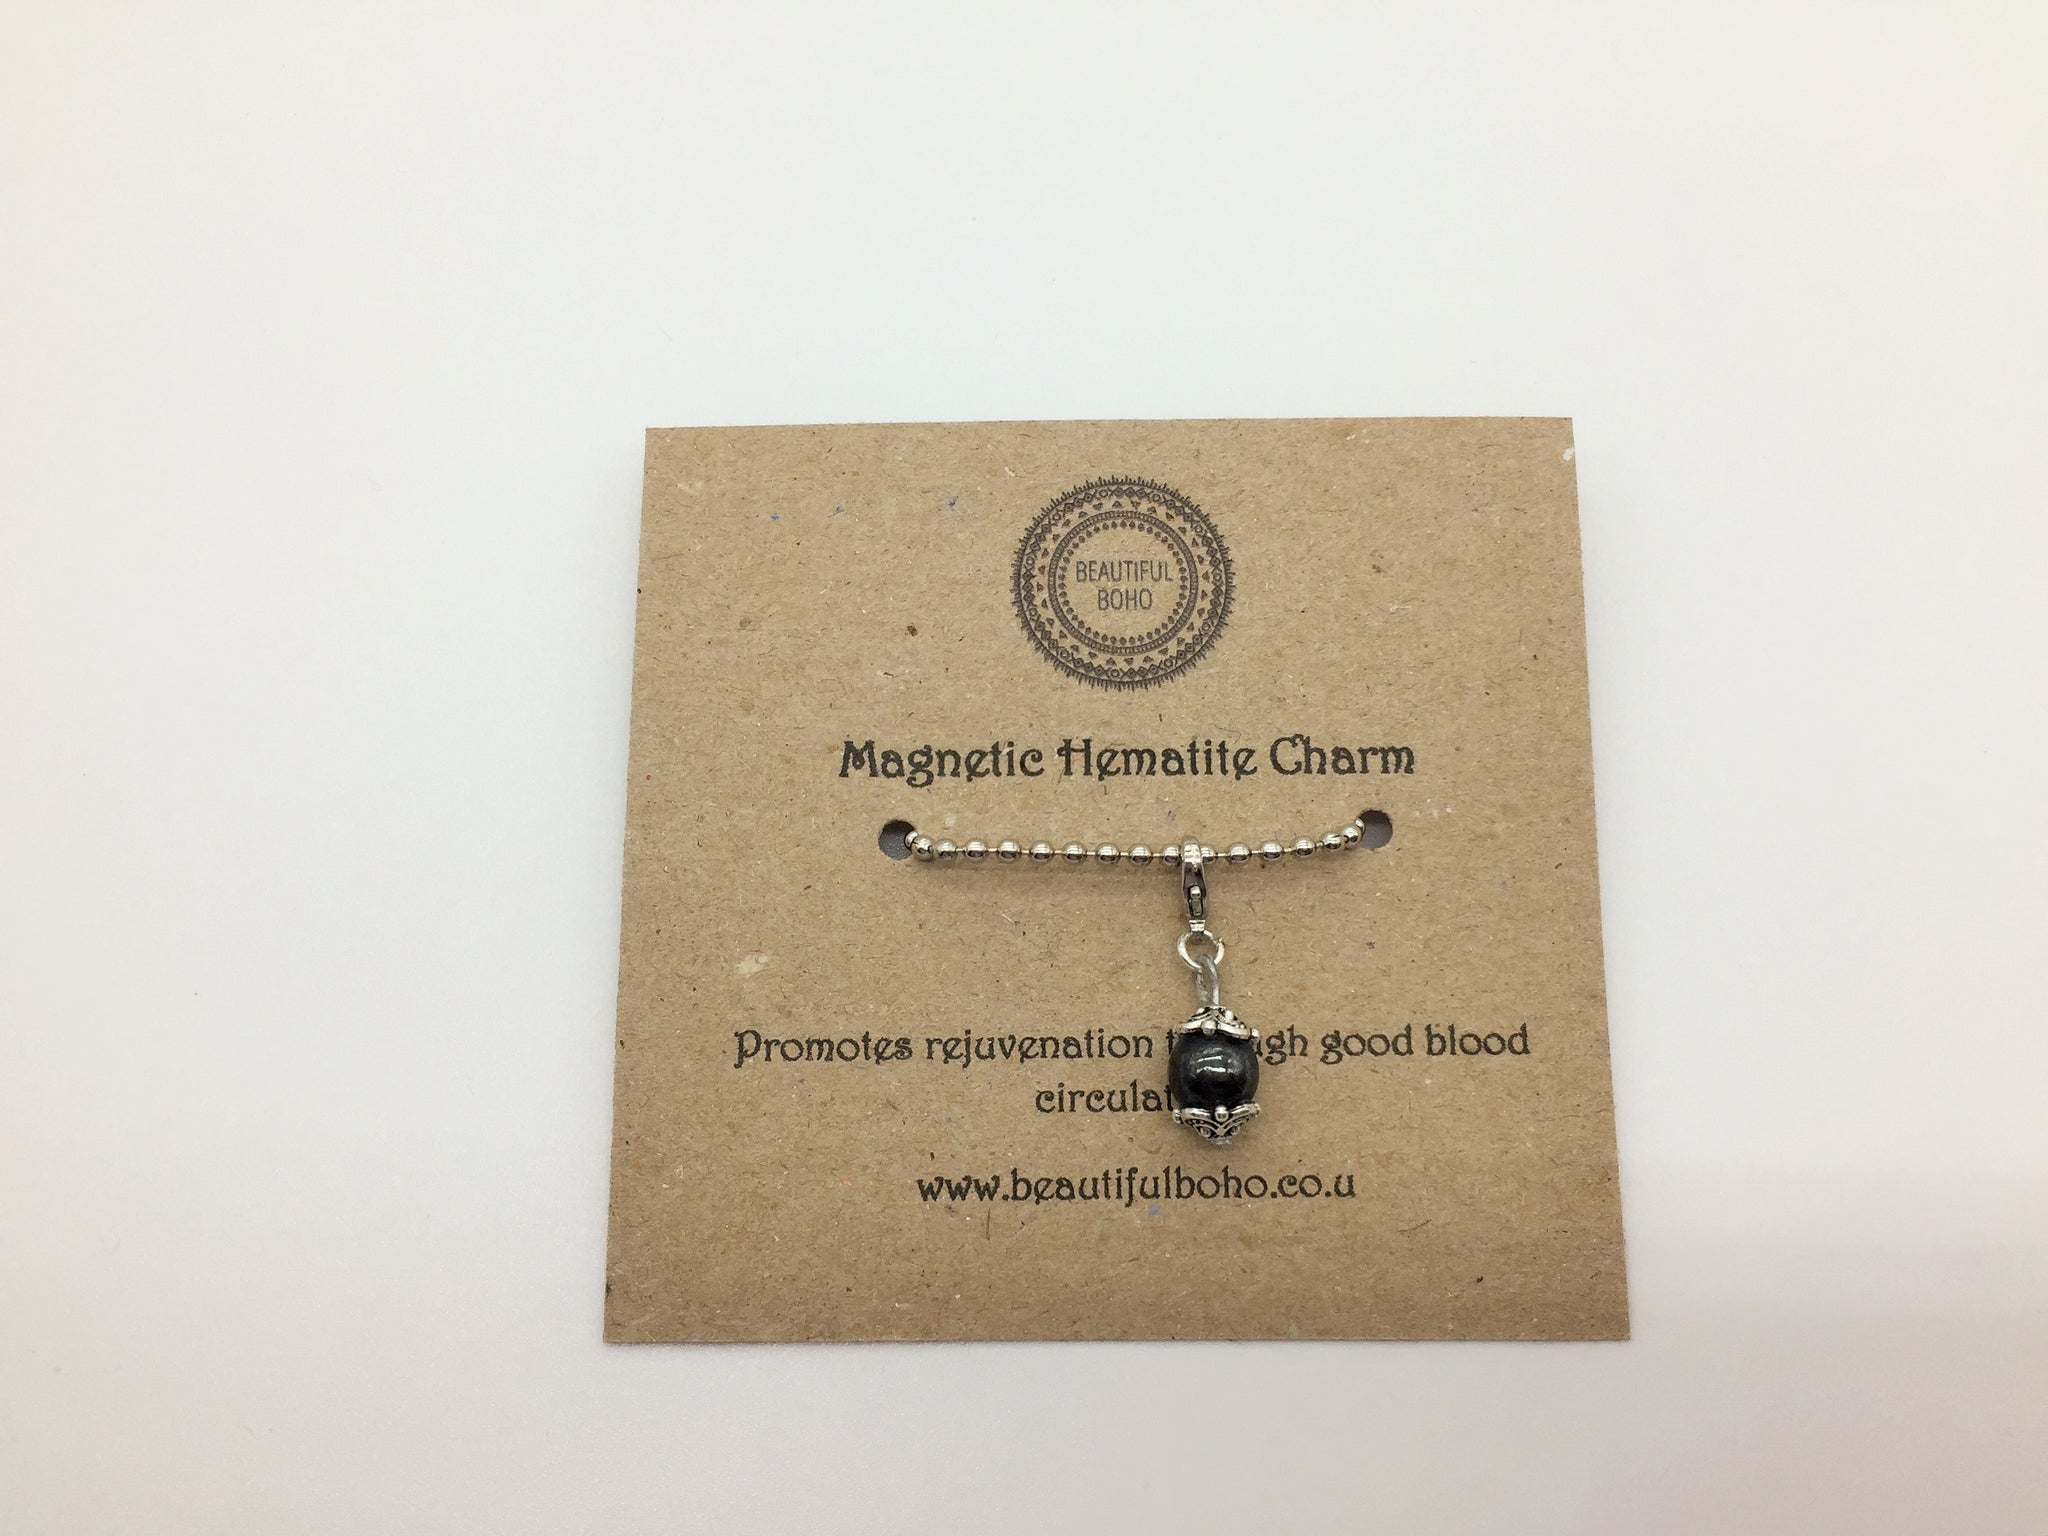 Magnetic Hematite Charm